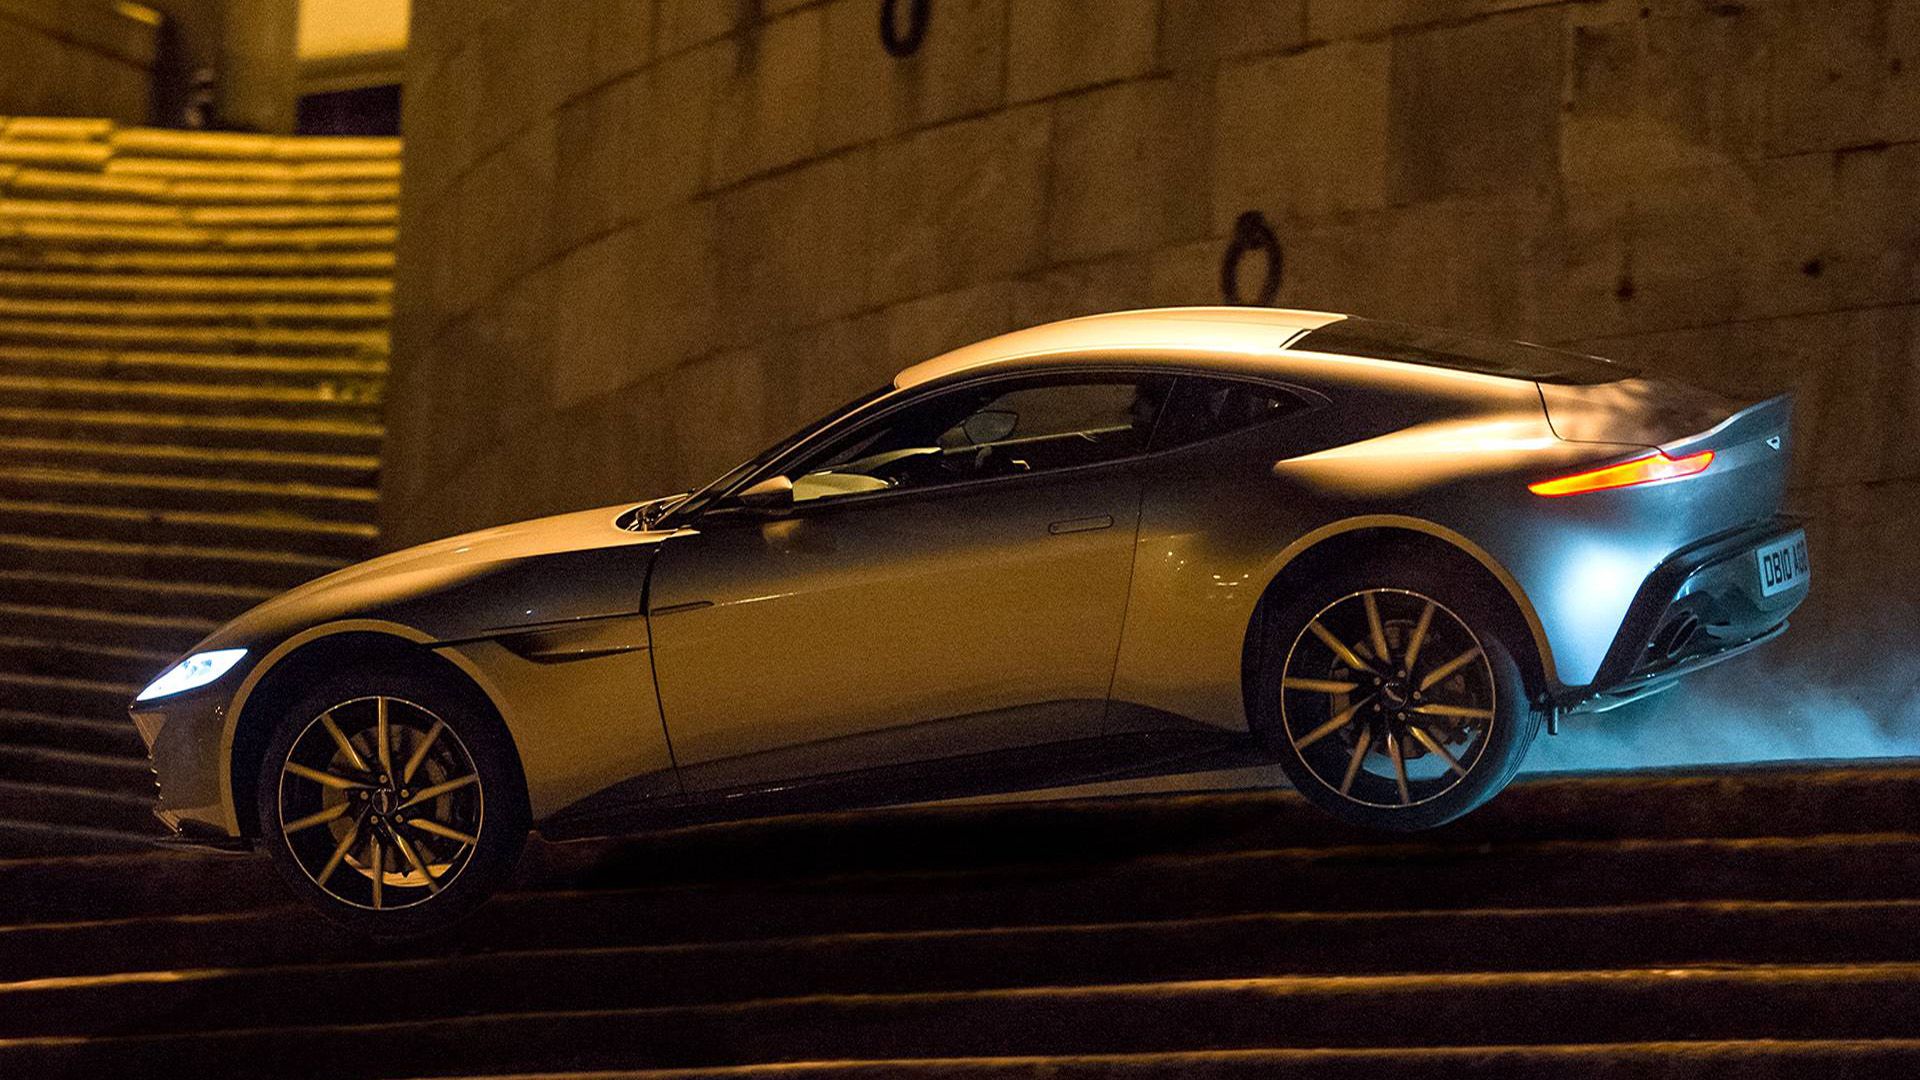 The 2015 Aston Martin DB10 